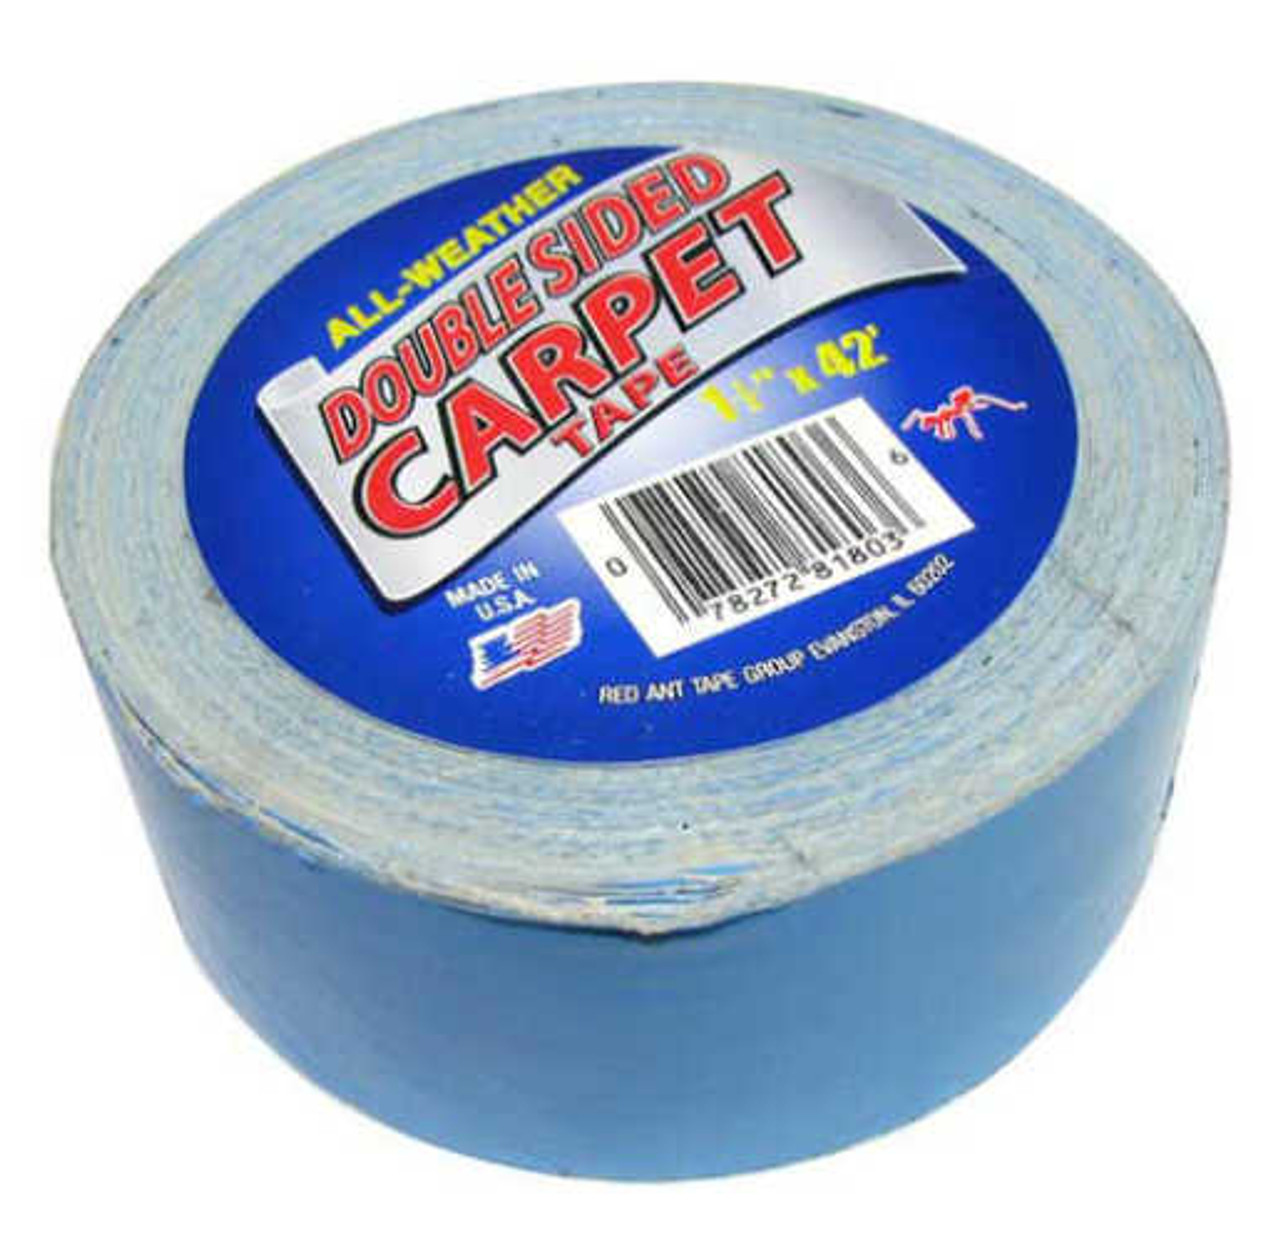 Can Gaffer Tape be used on carpet? - GafferTape.com